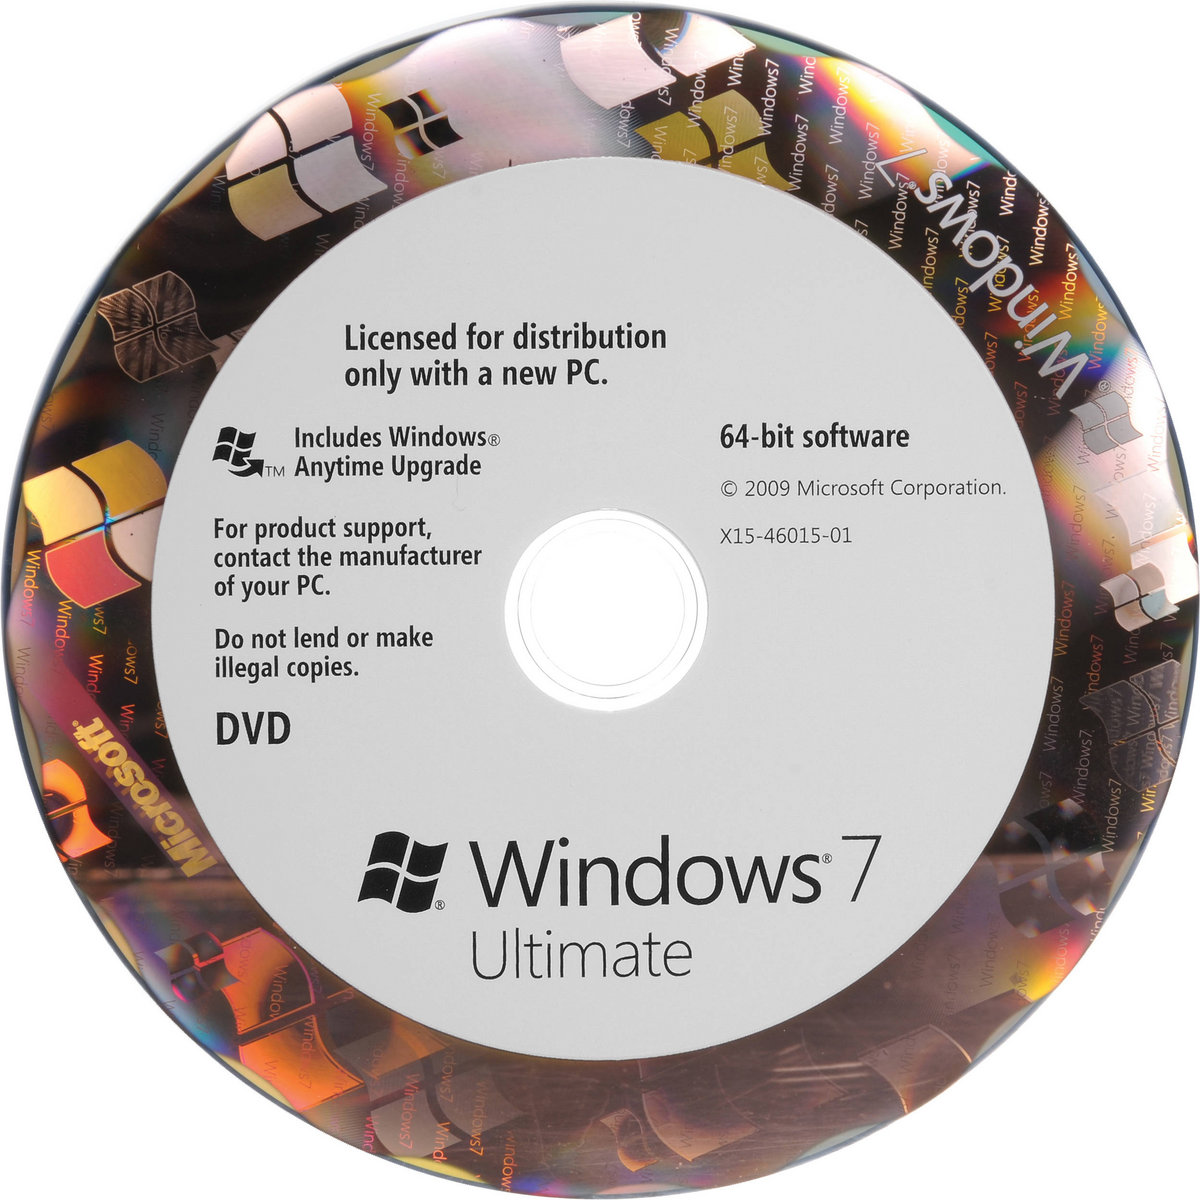 itunes download for windows 7 ultimate 64 bit